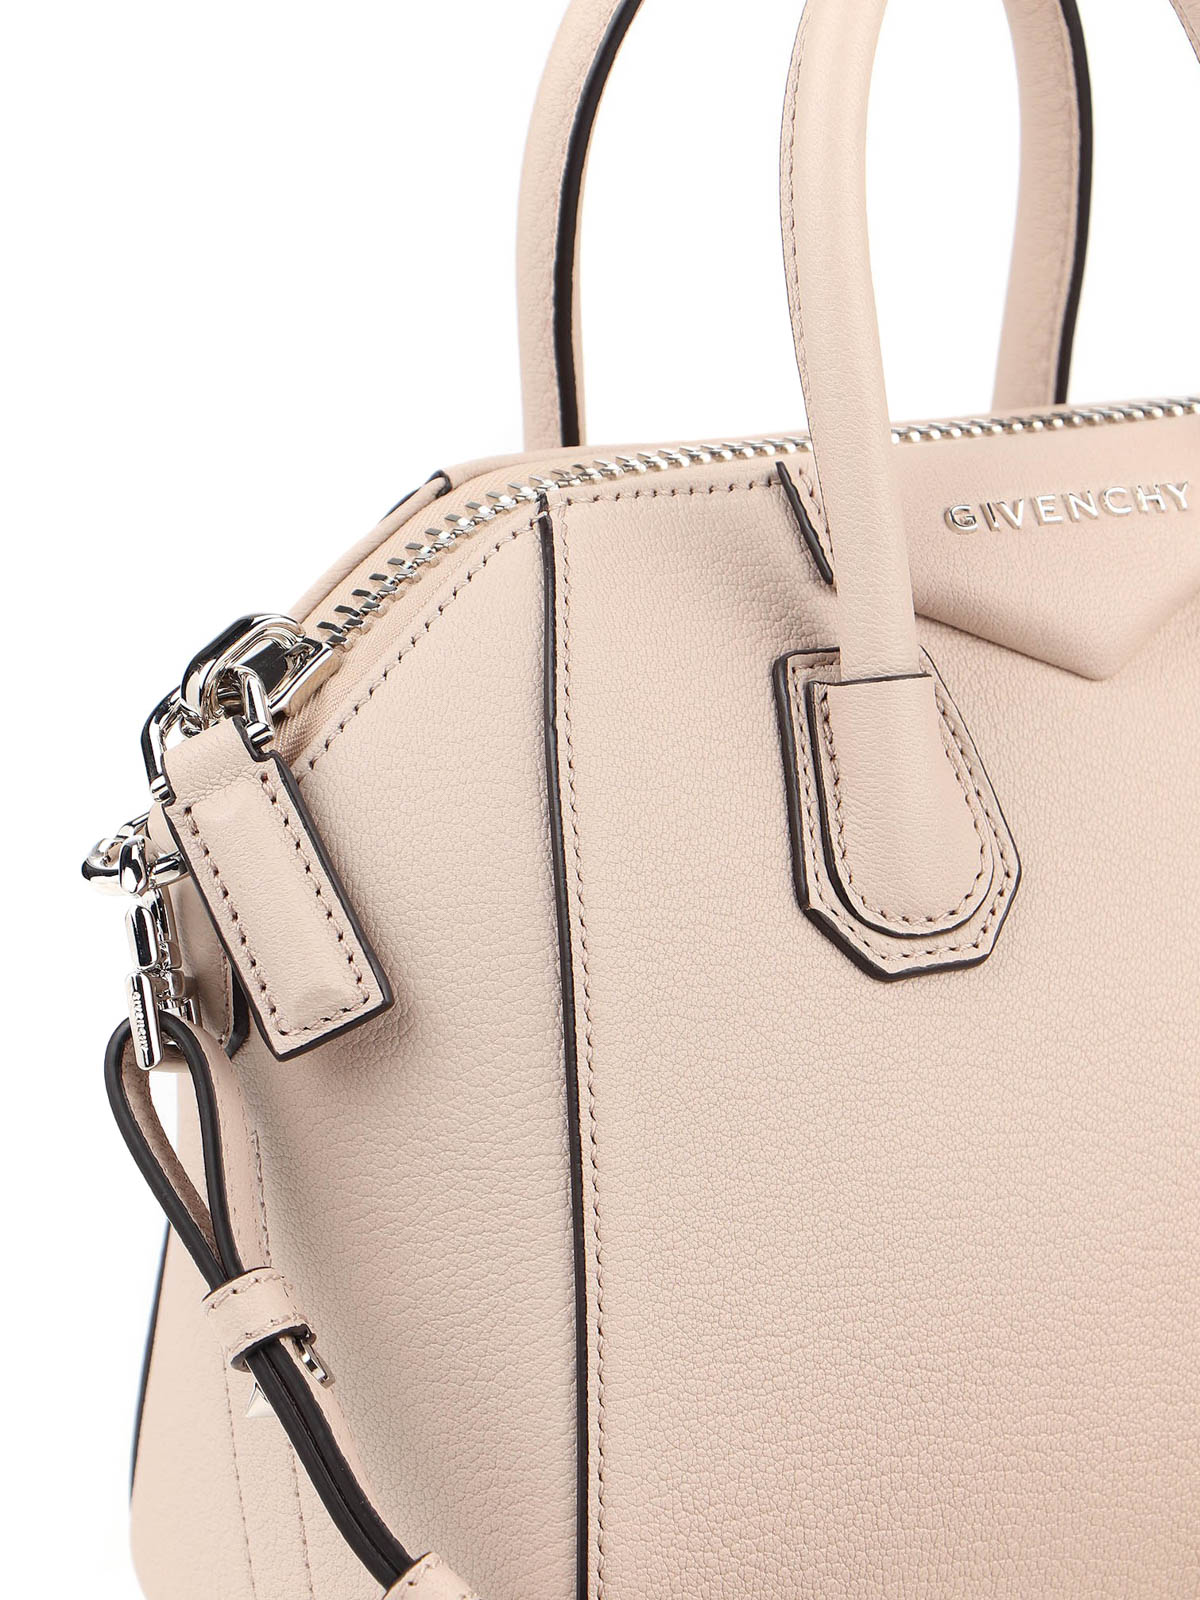 Givenchy Small Antigona Soft Bag Pearl Grey Leather Crossbody